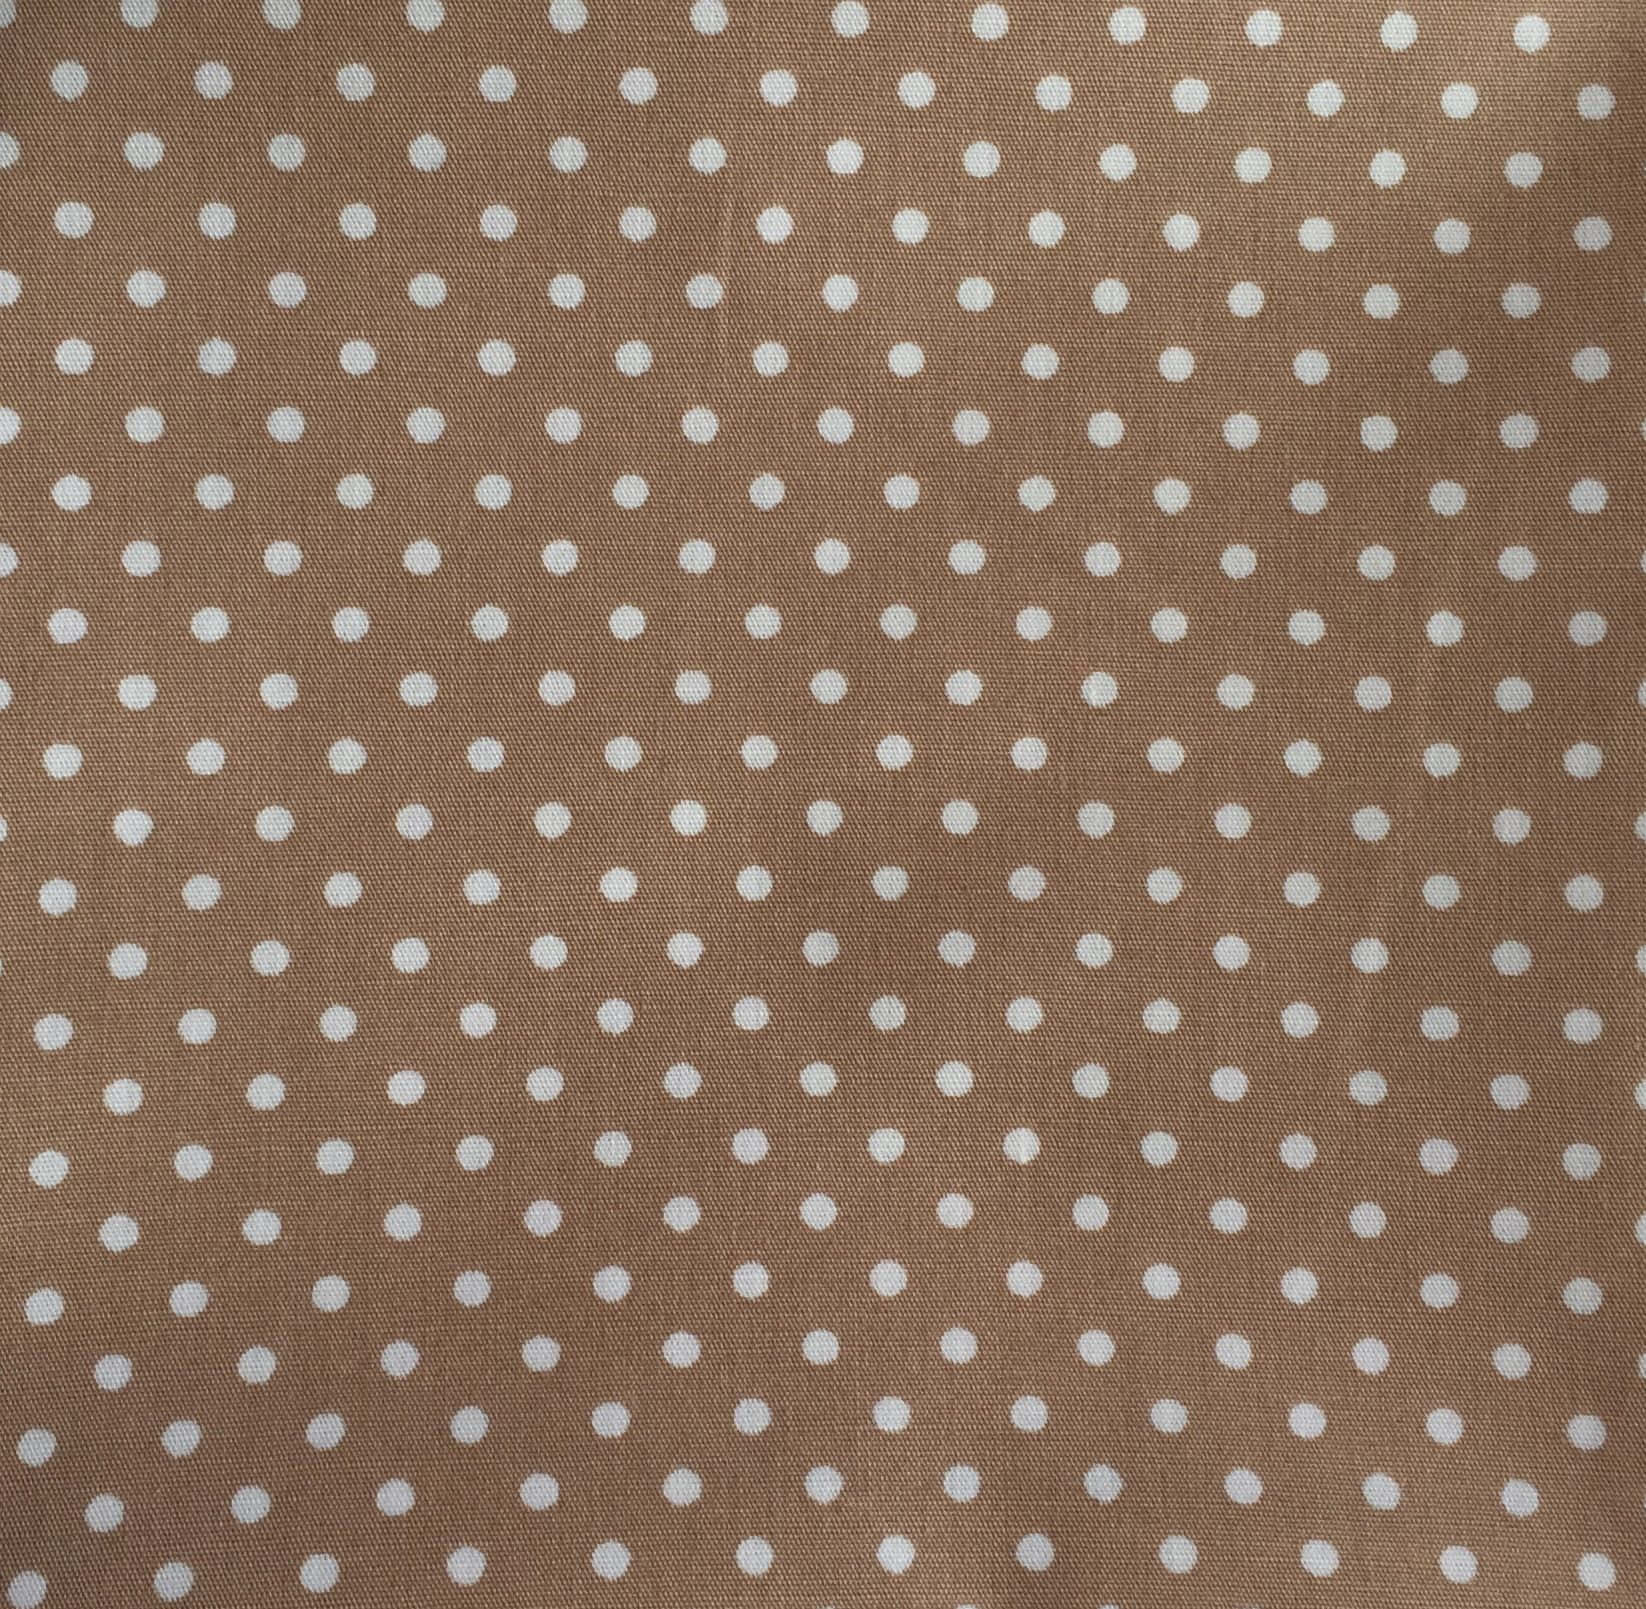 Elegance of Brown Polka Dots Pattern Wallpaper